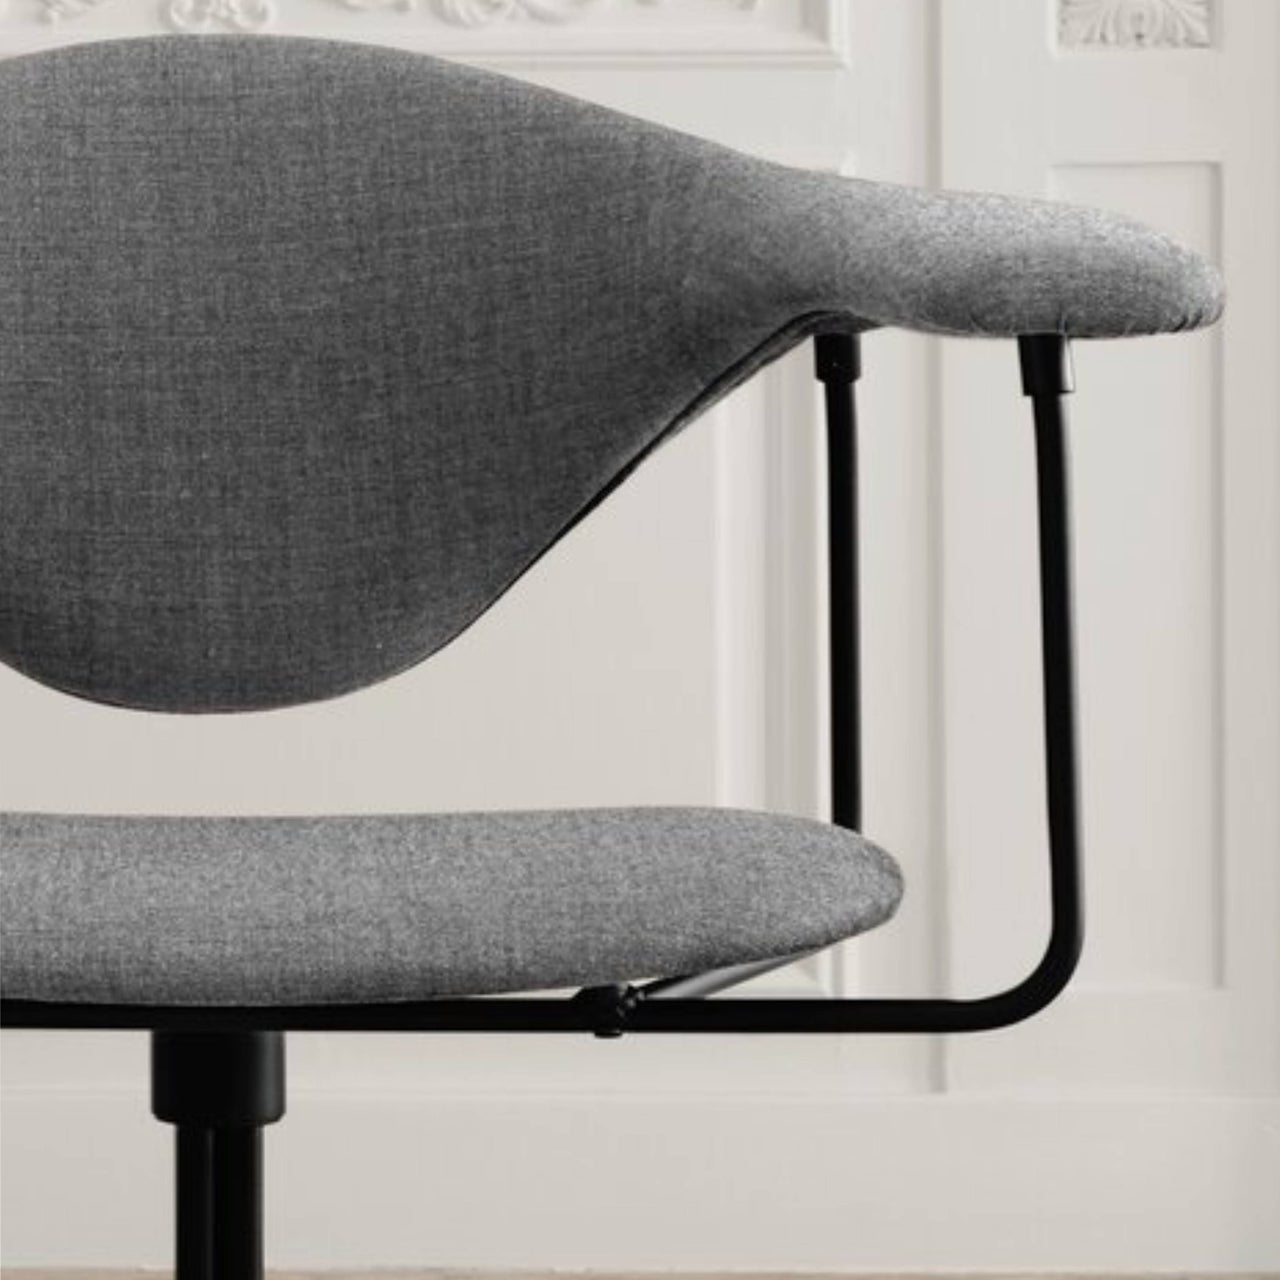 Masculo Meeting Chair: Swivel Base